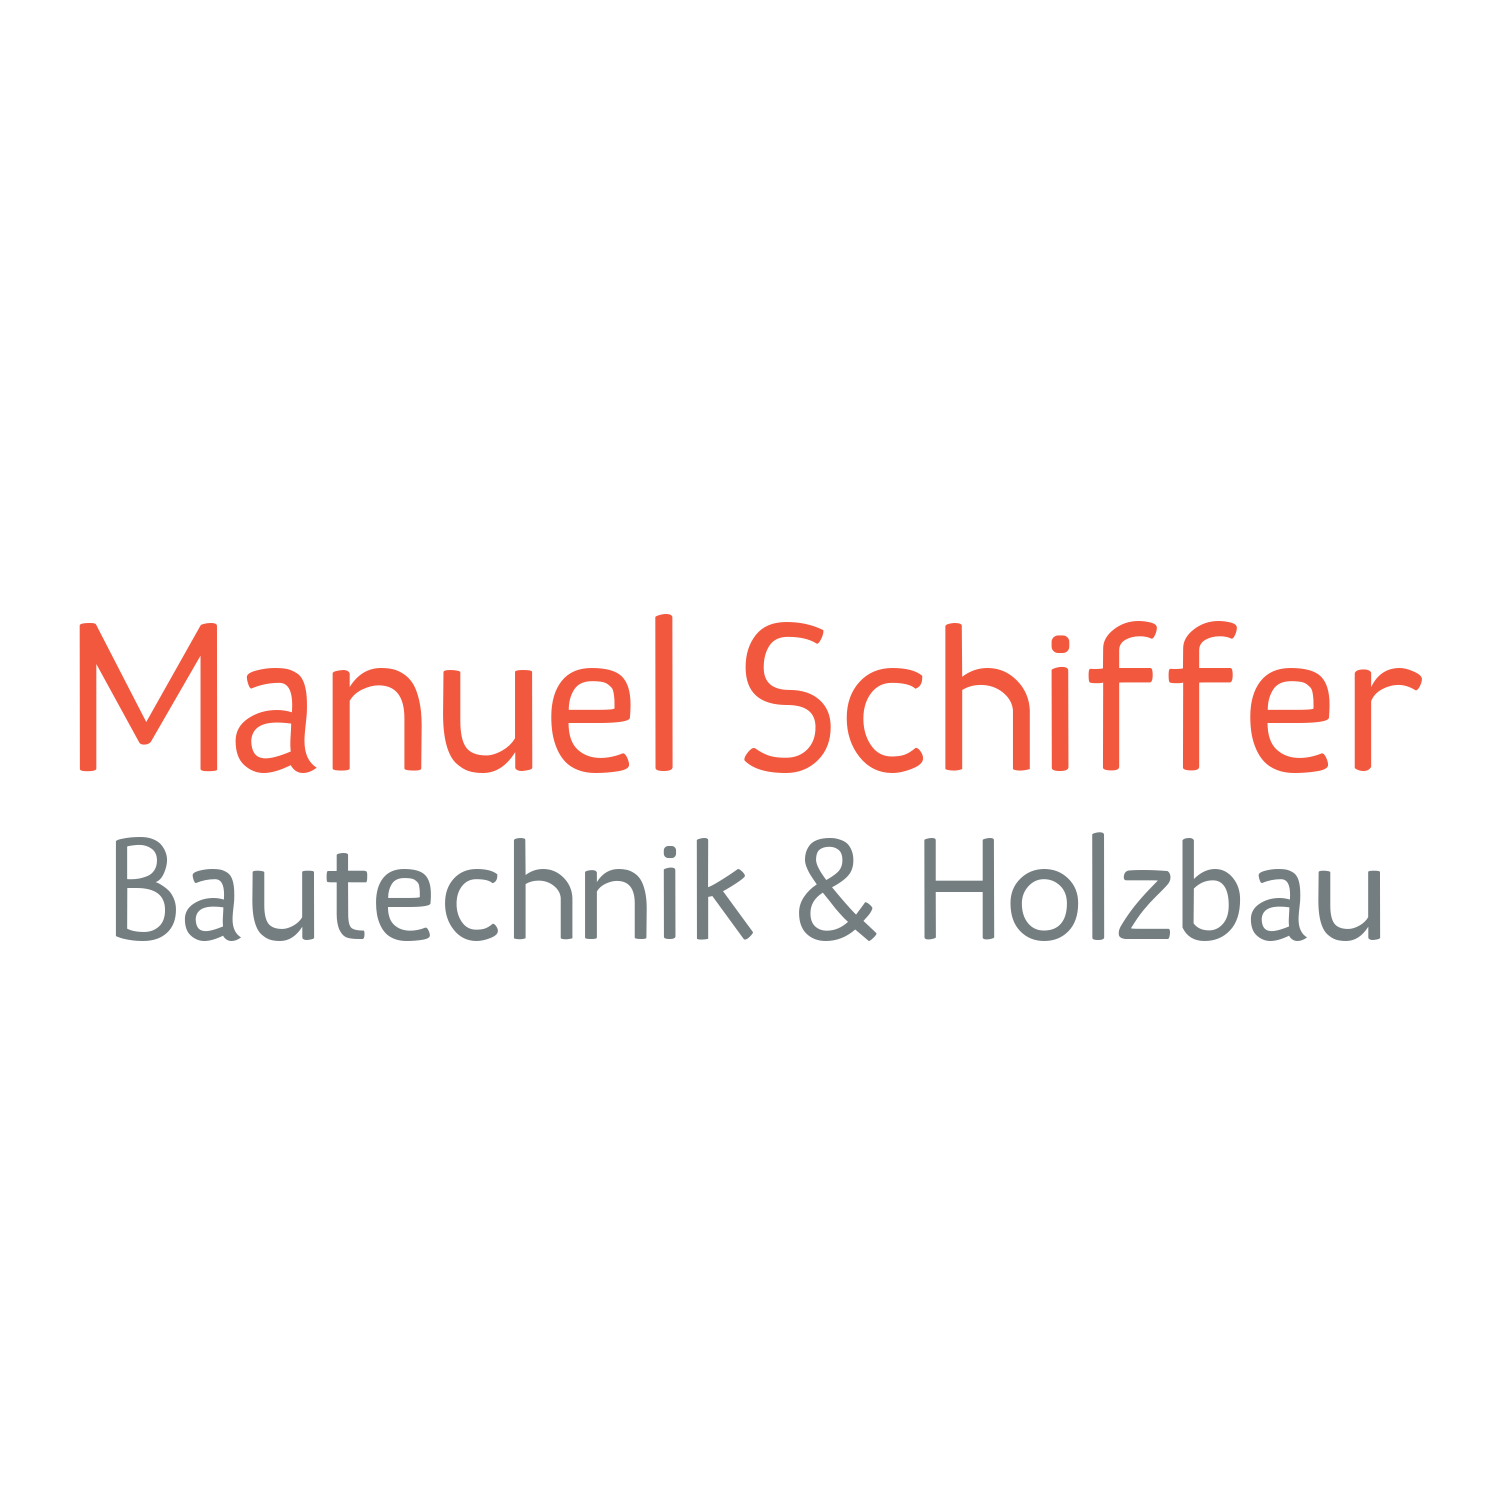 Manuel Schiffer Bautechnik & Holzbau Logo